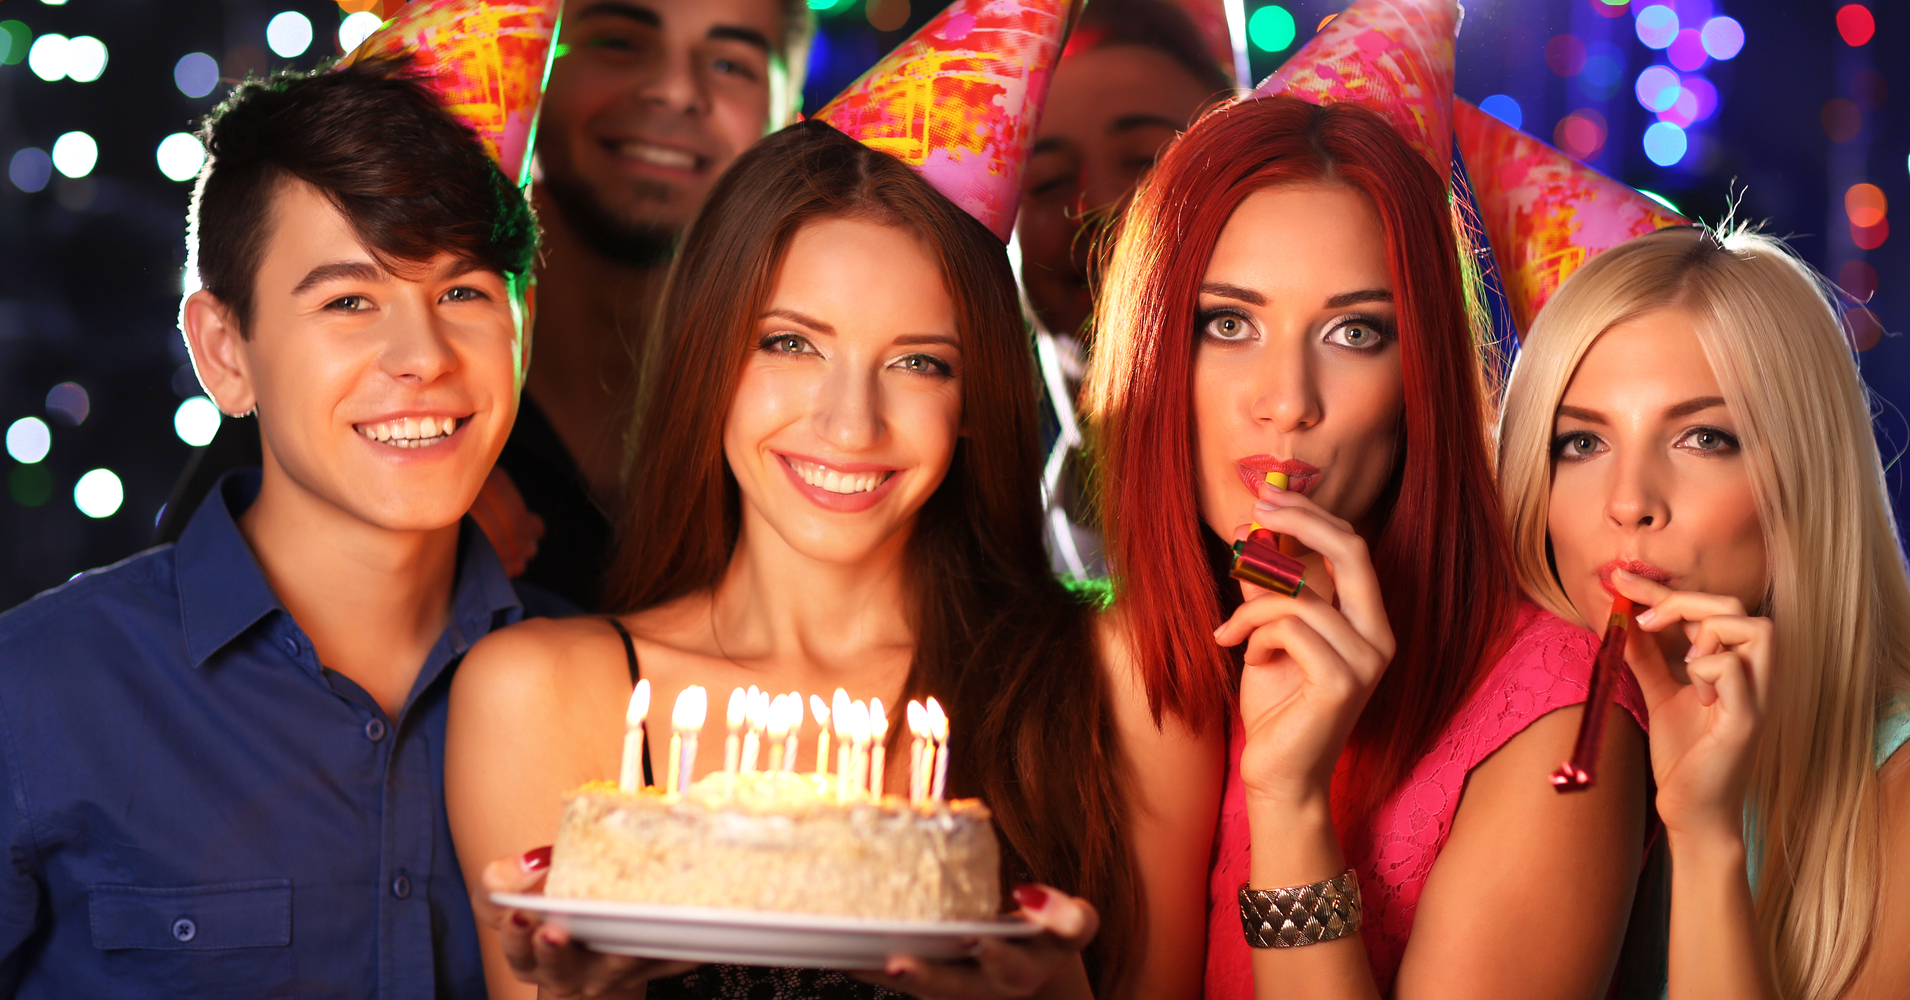 Where Should I Have My Birthday Party? - Quiz - Quizony.com